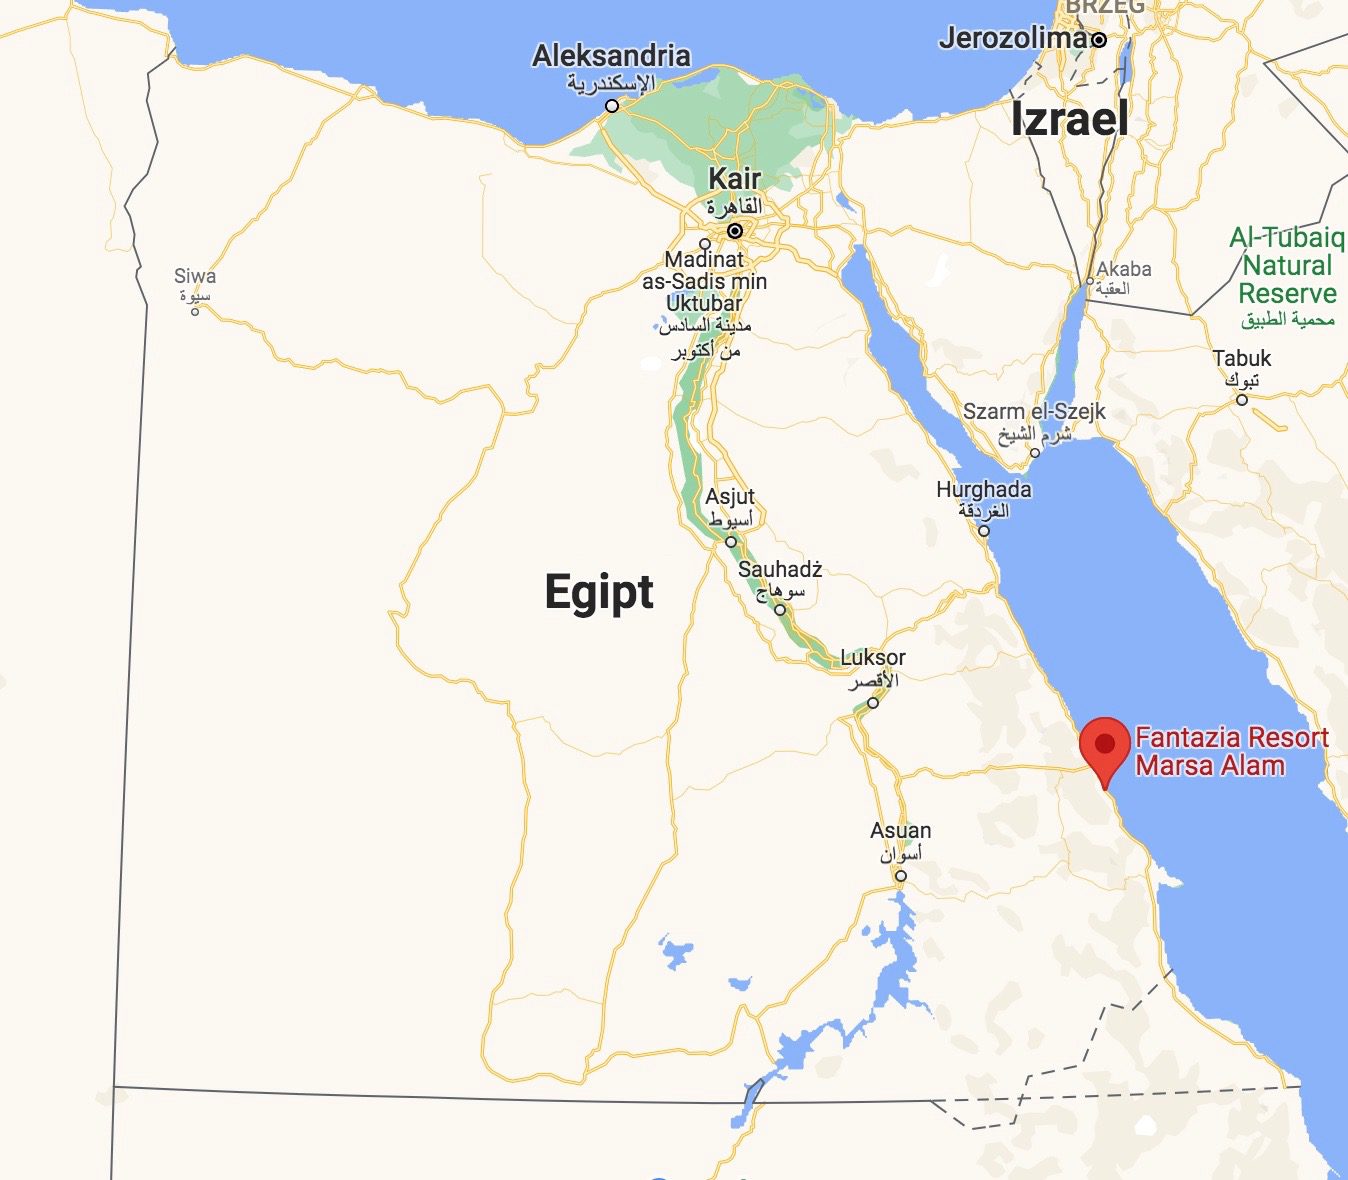 Egypt, Marsa Alam - The Map